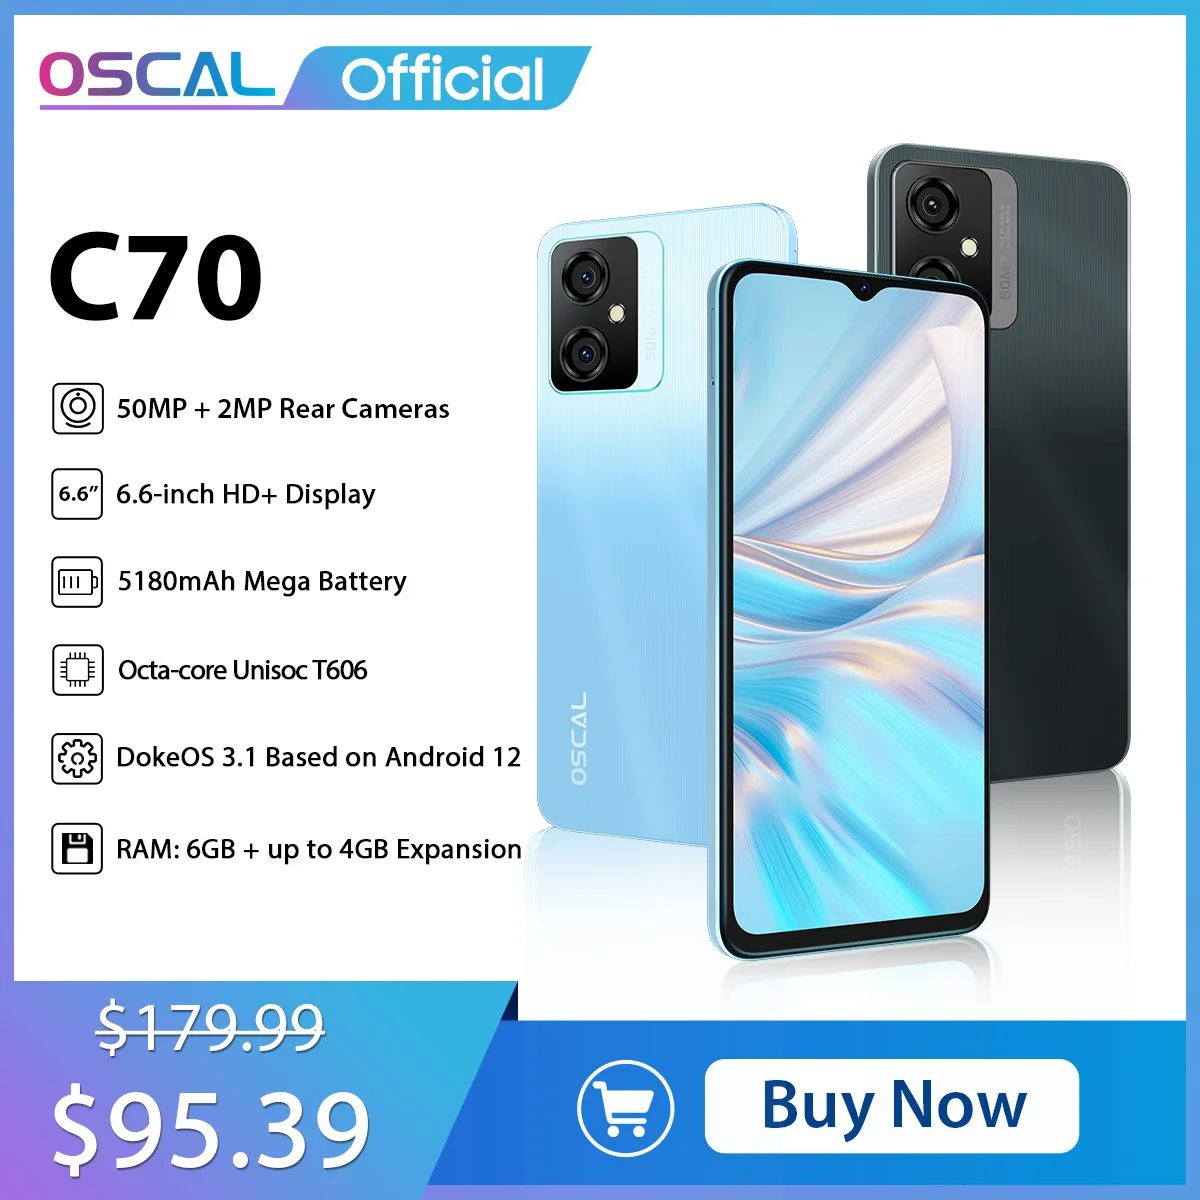 OSCAL C70 Smartphone 6GB+128GB Octa Core Android 12 50MP Camera 5180mAh Cell Phone 6.6